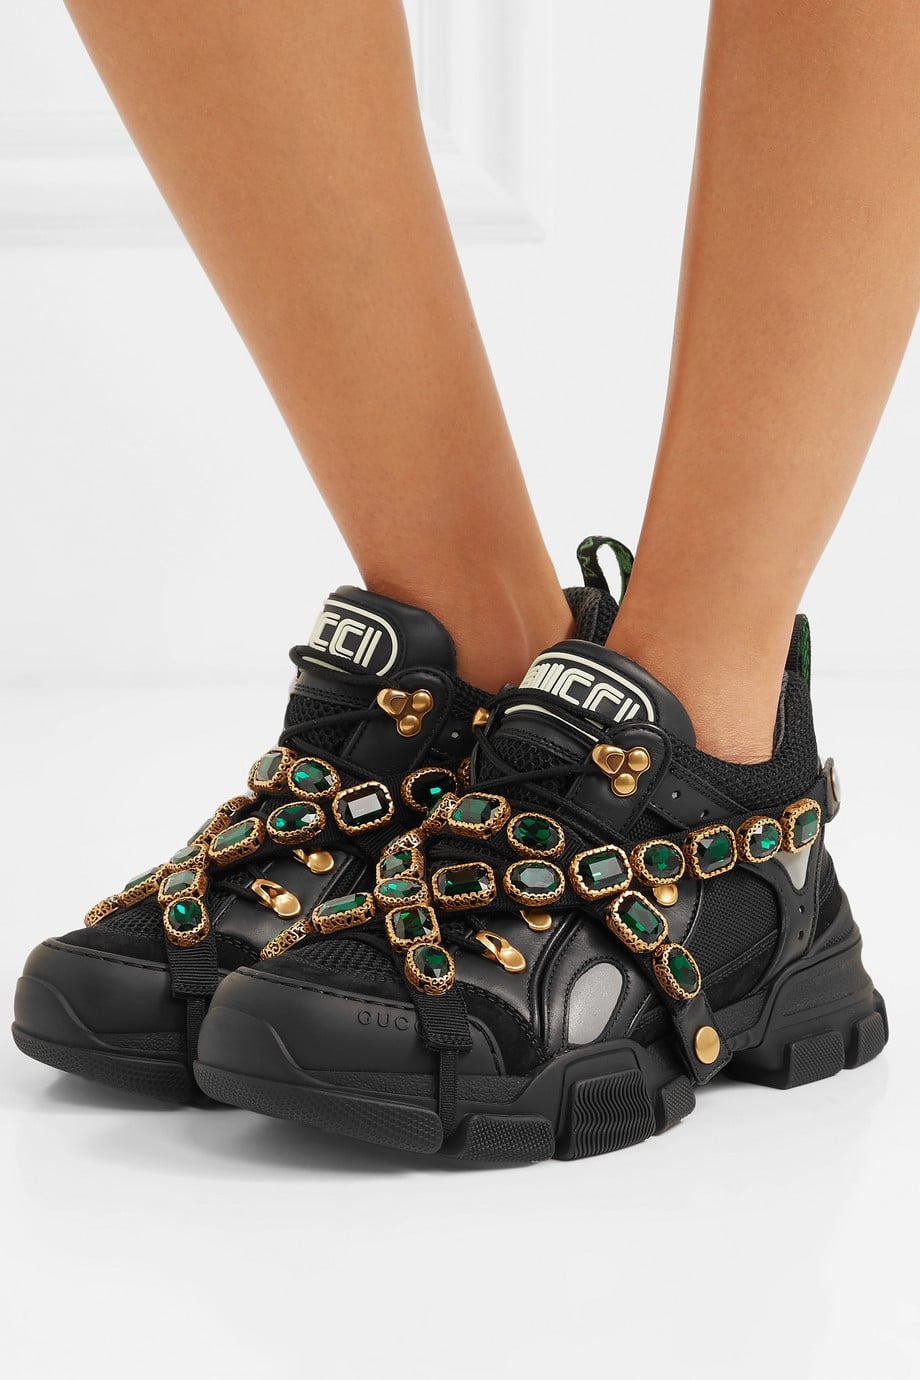 Smash kom Krijger Gucci Flashtrek Embellished Sneakers | 33 Billie Eilish Fashion Gifts to  Help Fans Bring Out Their Inner Bad Girl | POPSUGAR Fashion Photo 14